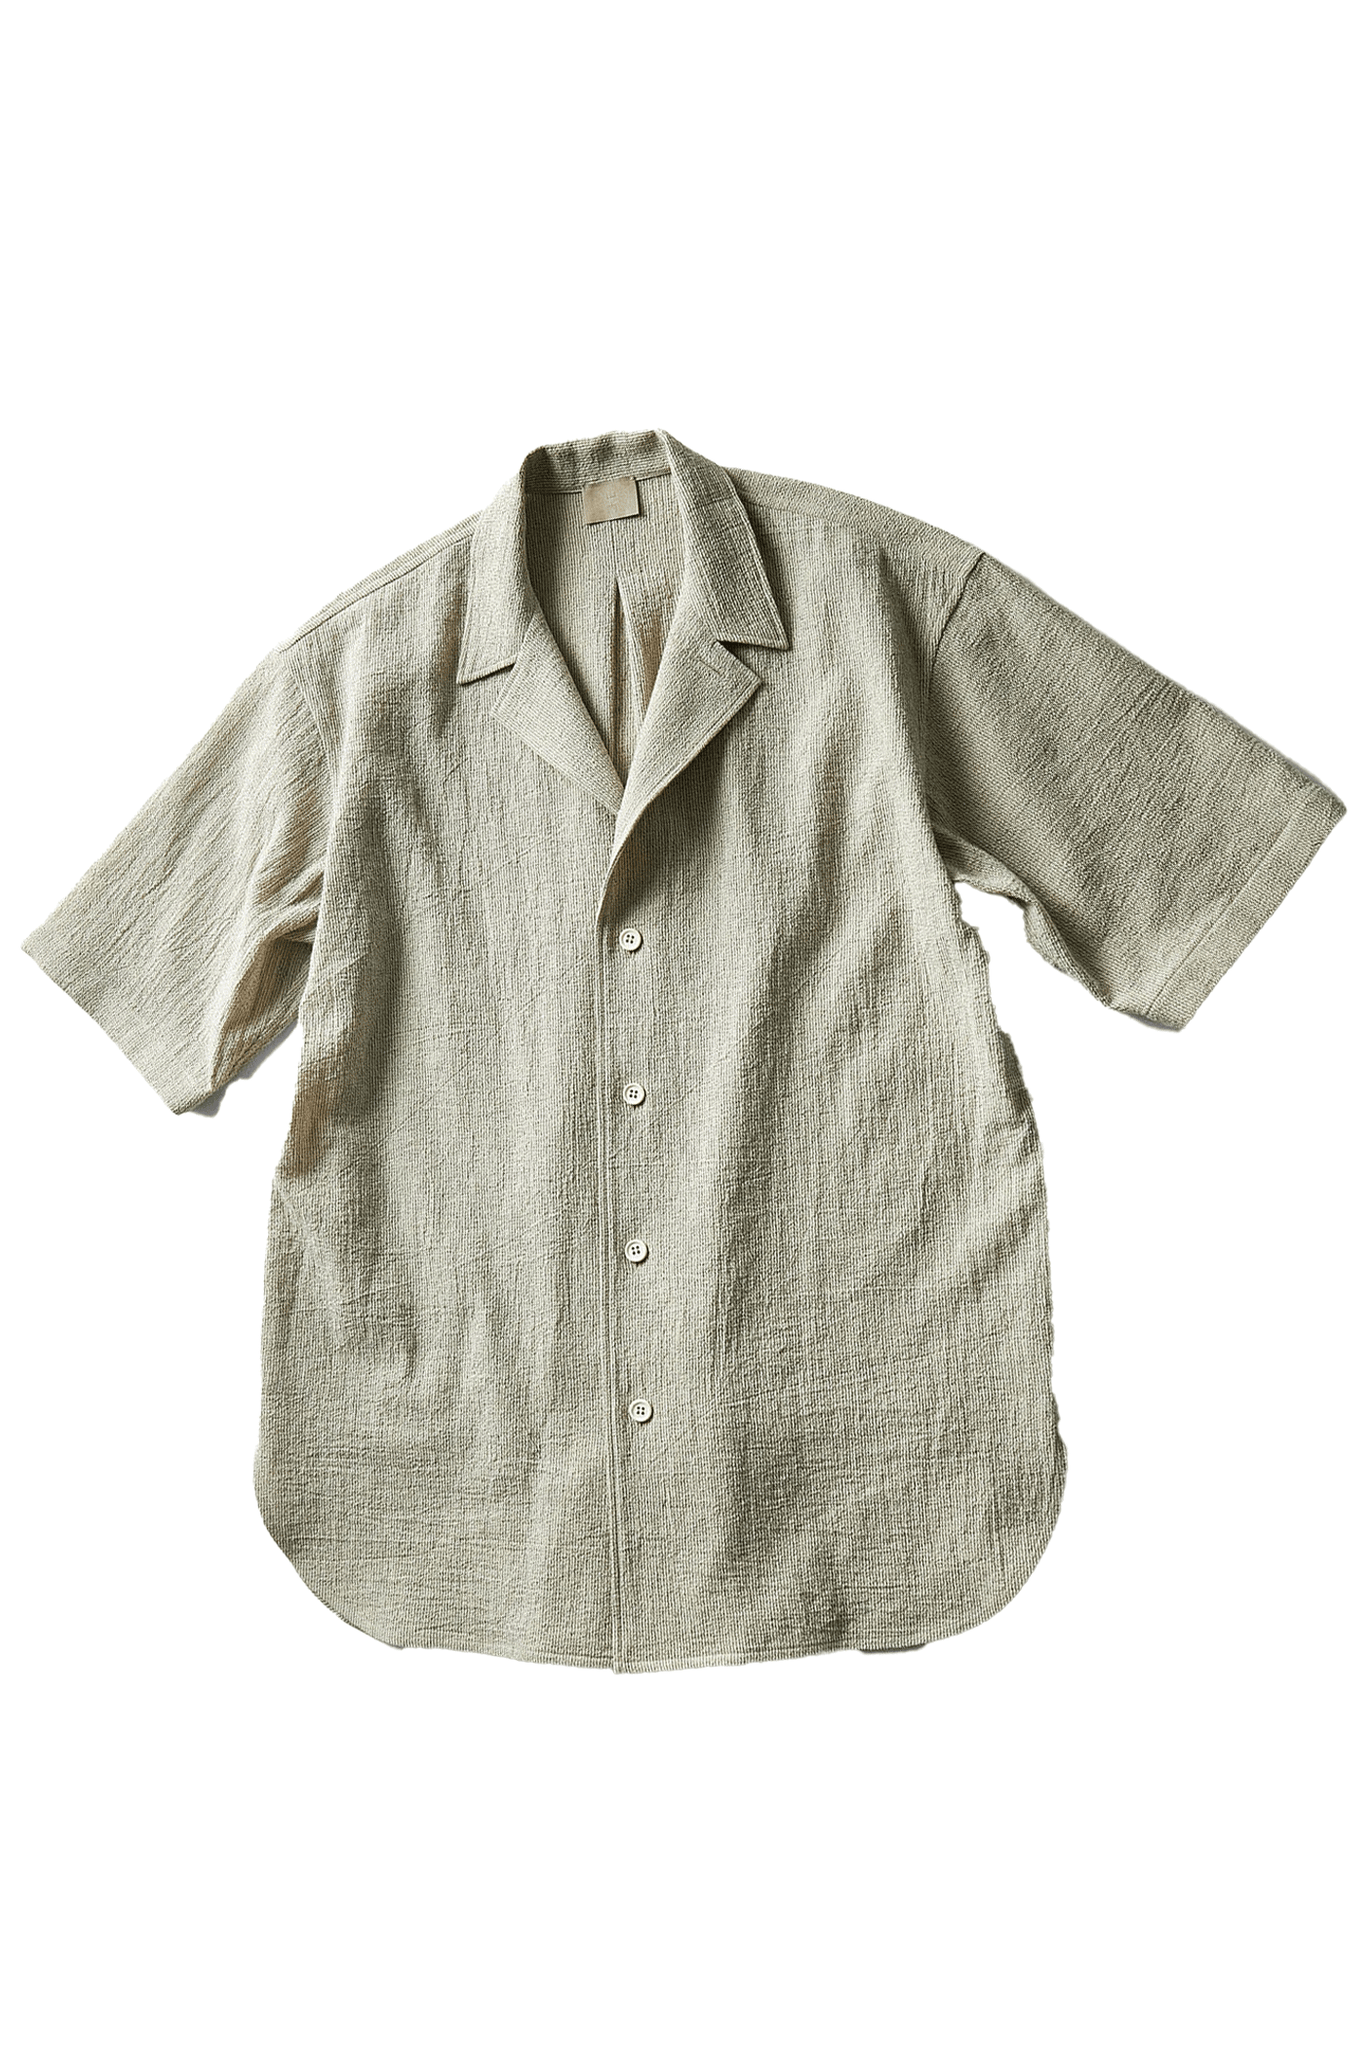 Yamauchi "Cotton Voile Striped Shirt/Short Sleeve Shirt"